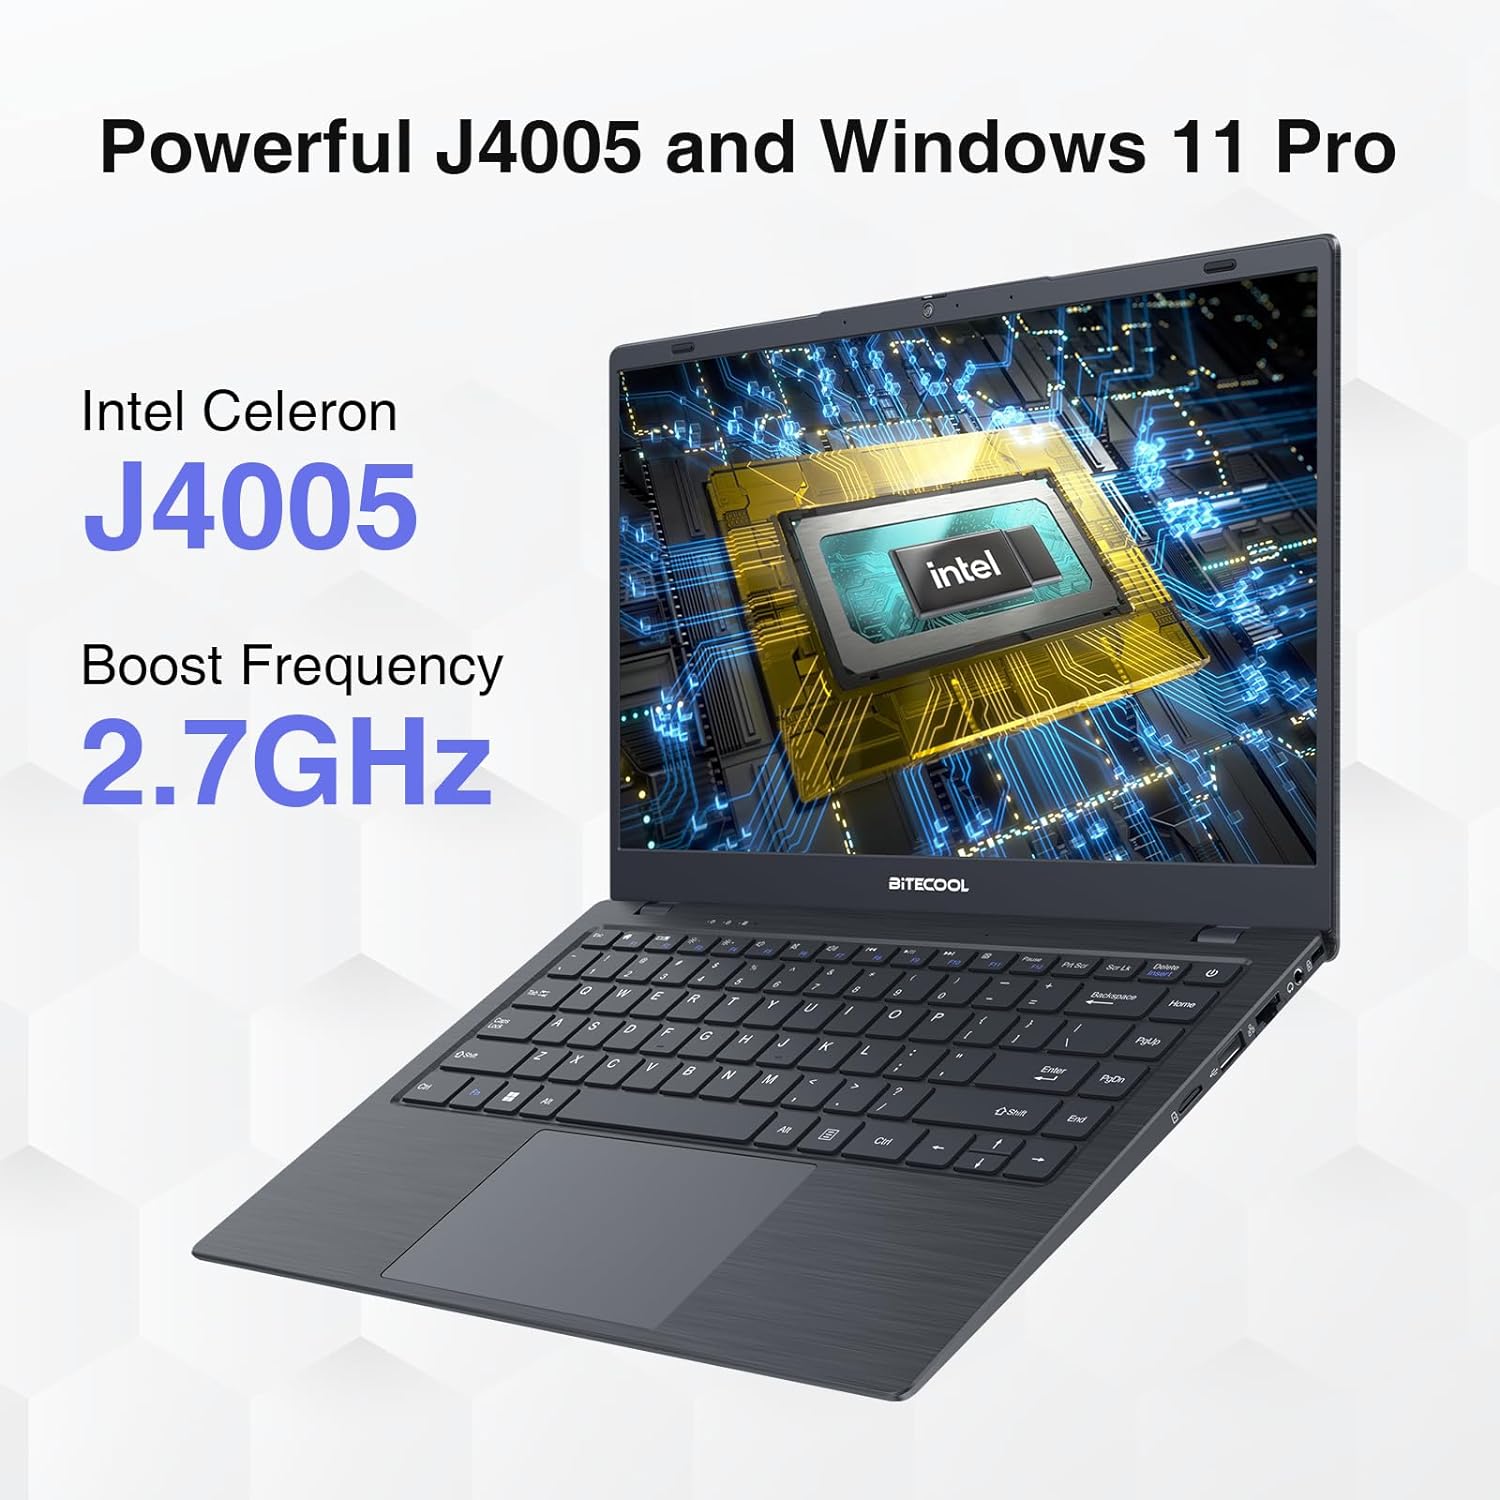 BiTECOOL 14-inch Windows 11 Laptop Computer, 12GB RAM 256GB SSD Laptop, Intel Celeron J4005 Dual Core up to 2.7GHz, FHD IPS Display, 2.4G/5G WiFi, BT5.1, Webcam, Lightweight and Portable